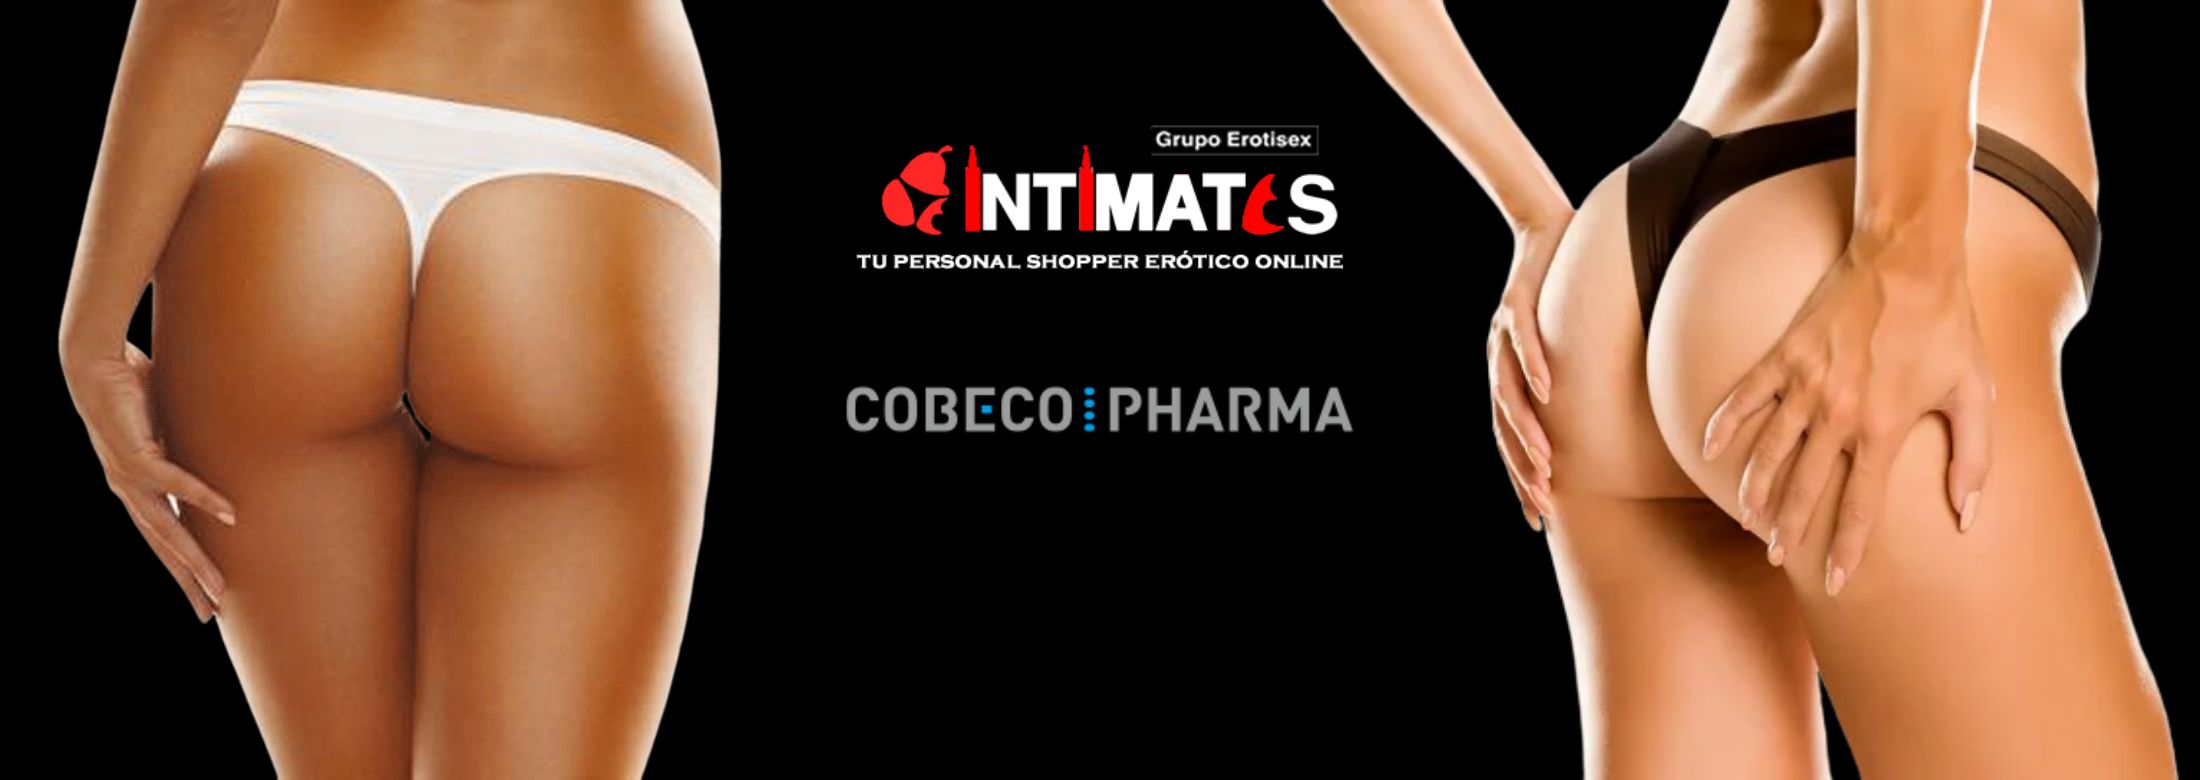 Cobeco Sexual Wellness en intimates.es "Tu Personal Shopper Erótico Online"